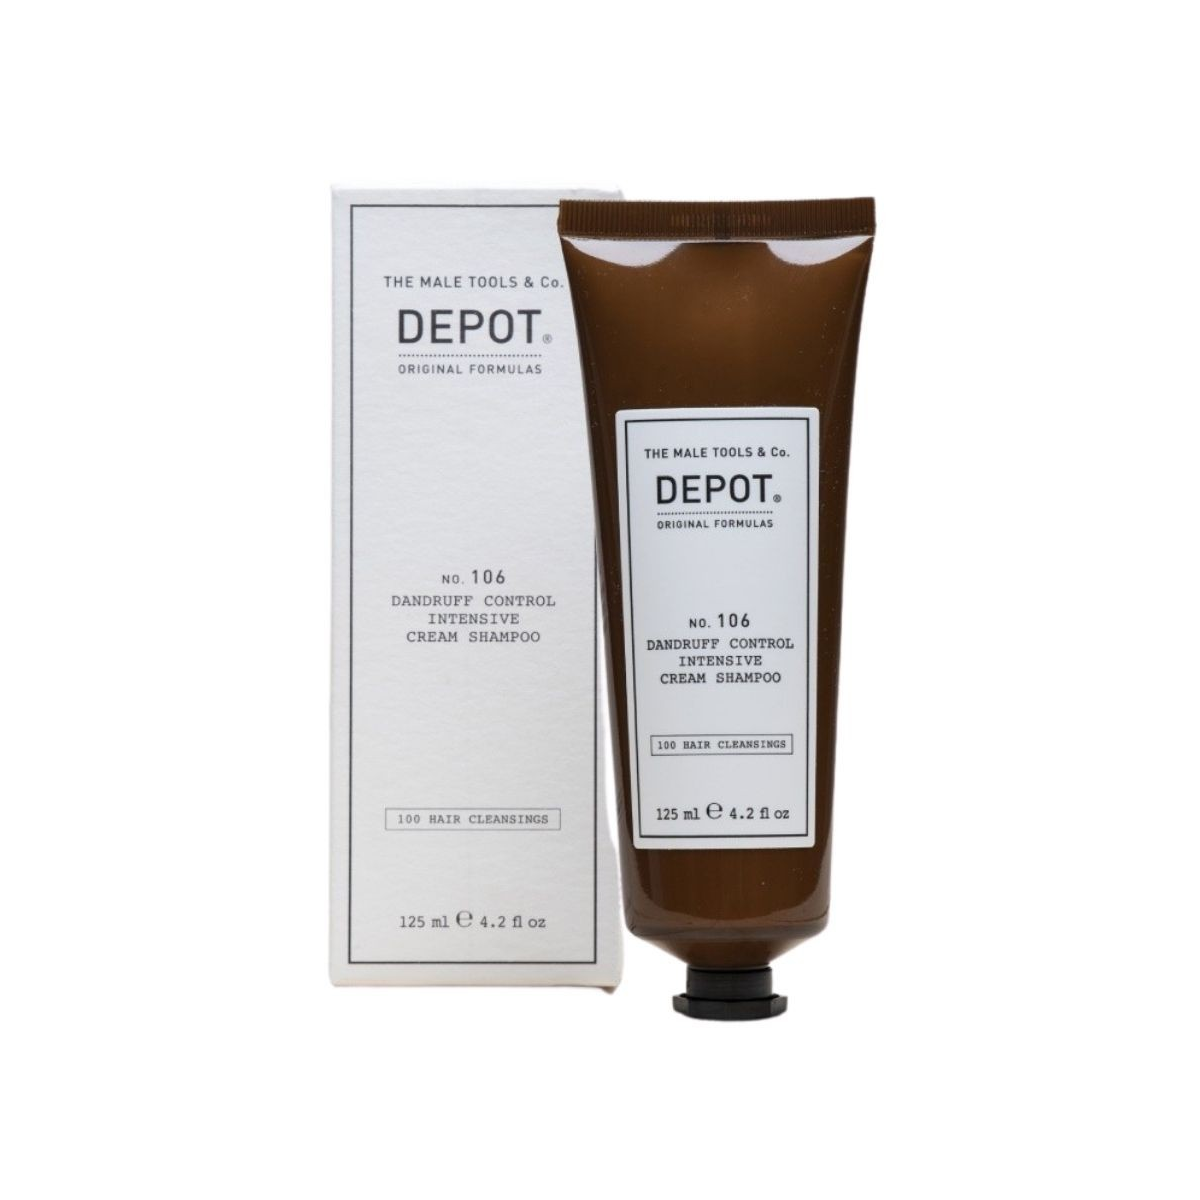 DEPOT - No.106 DANDRUFF CONTROL INTENSIVE CREAM SHAMPOO (125ml) Shampoo in crema anti forfora